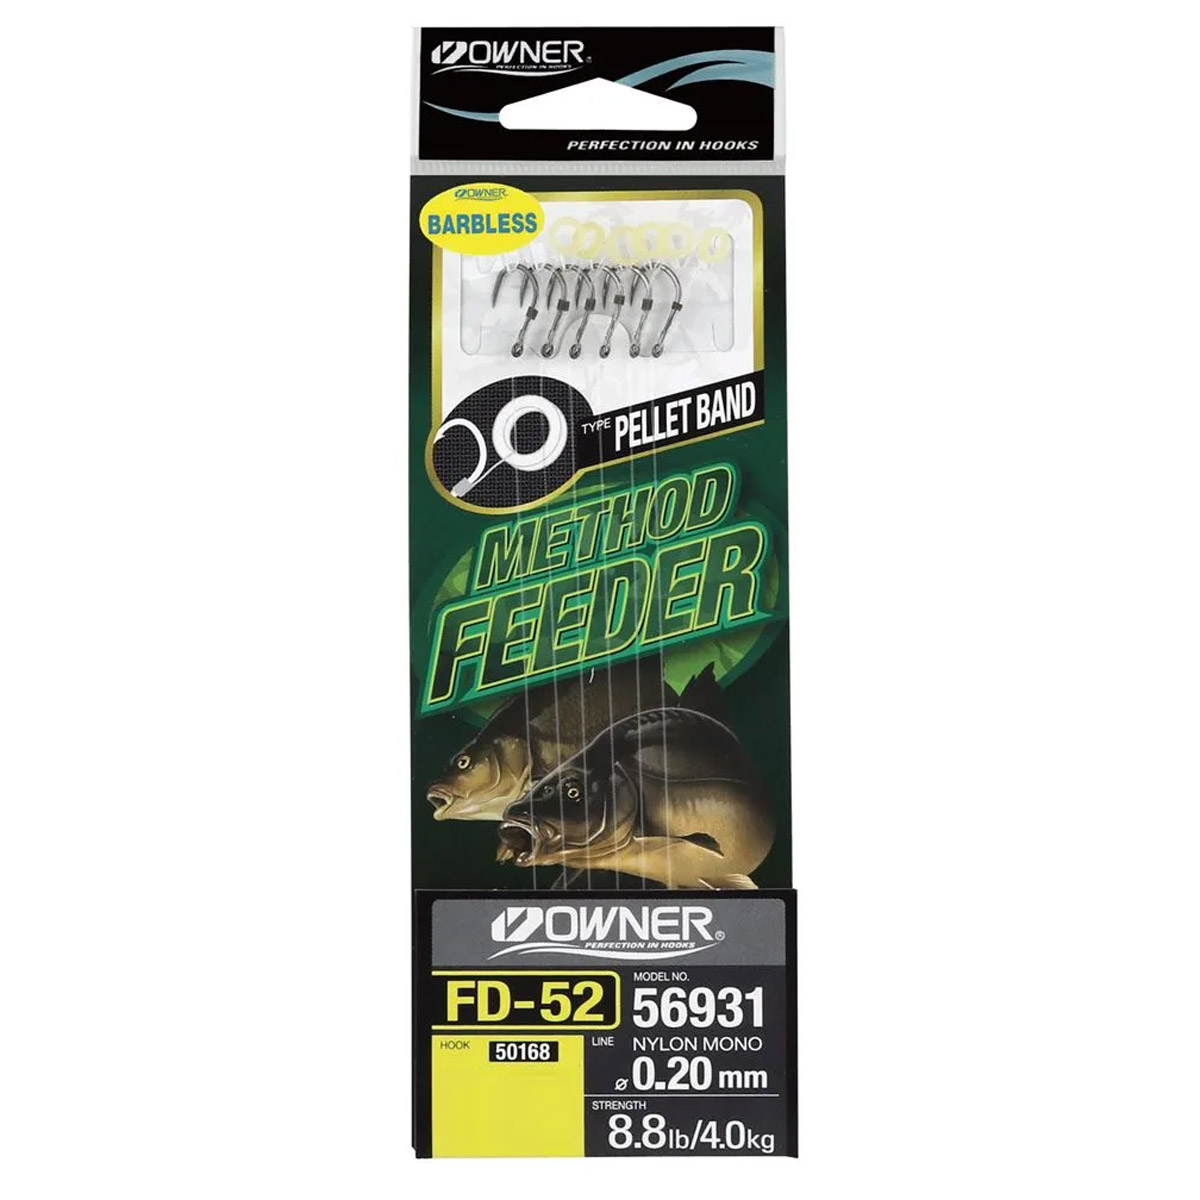 Owner FD-52 Method Feeder Pellet Band Rigs Barbless 10 CM -  8 -  10 -  12 -  14 -  16